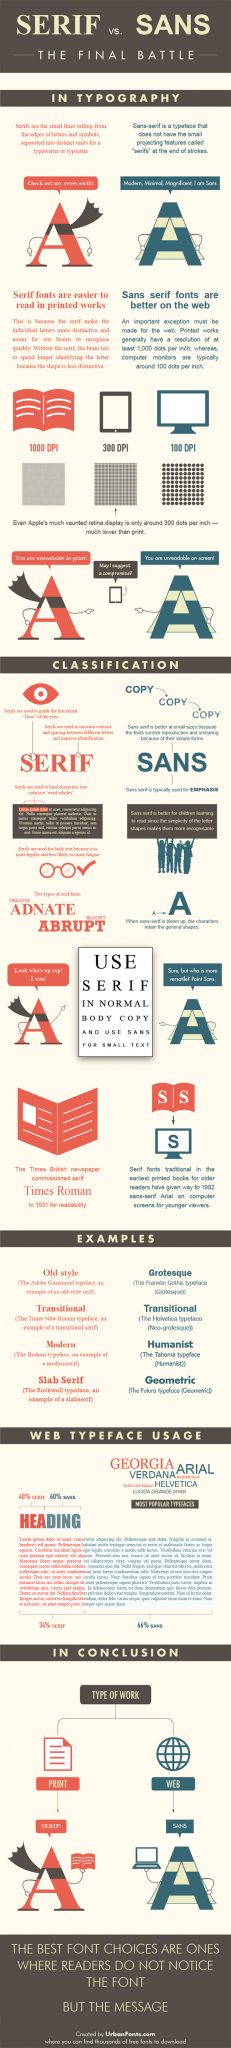 serif-vs-sans-serif